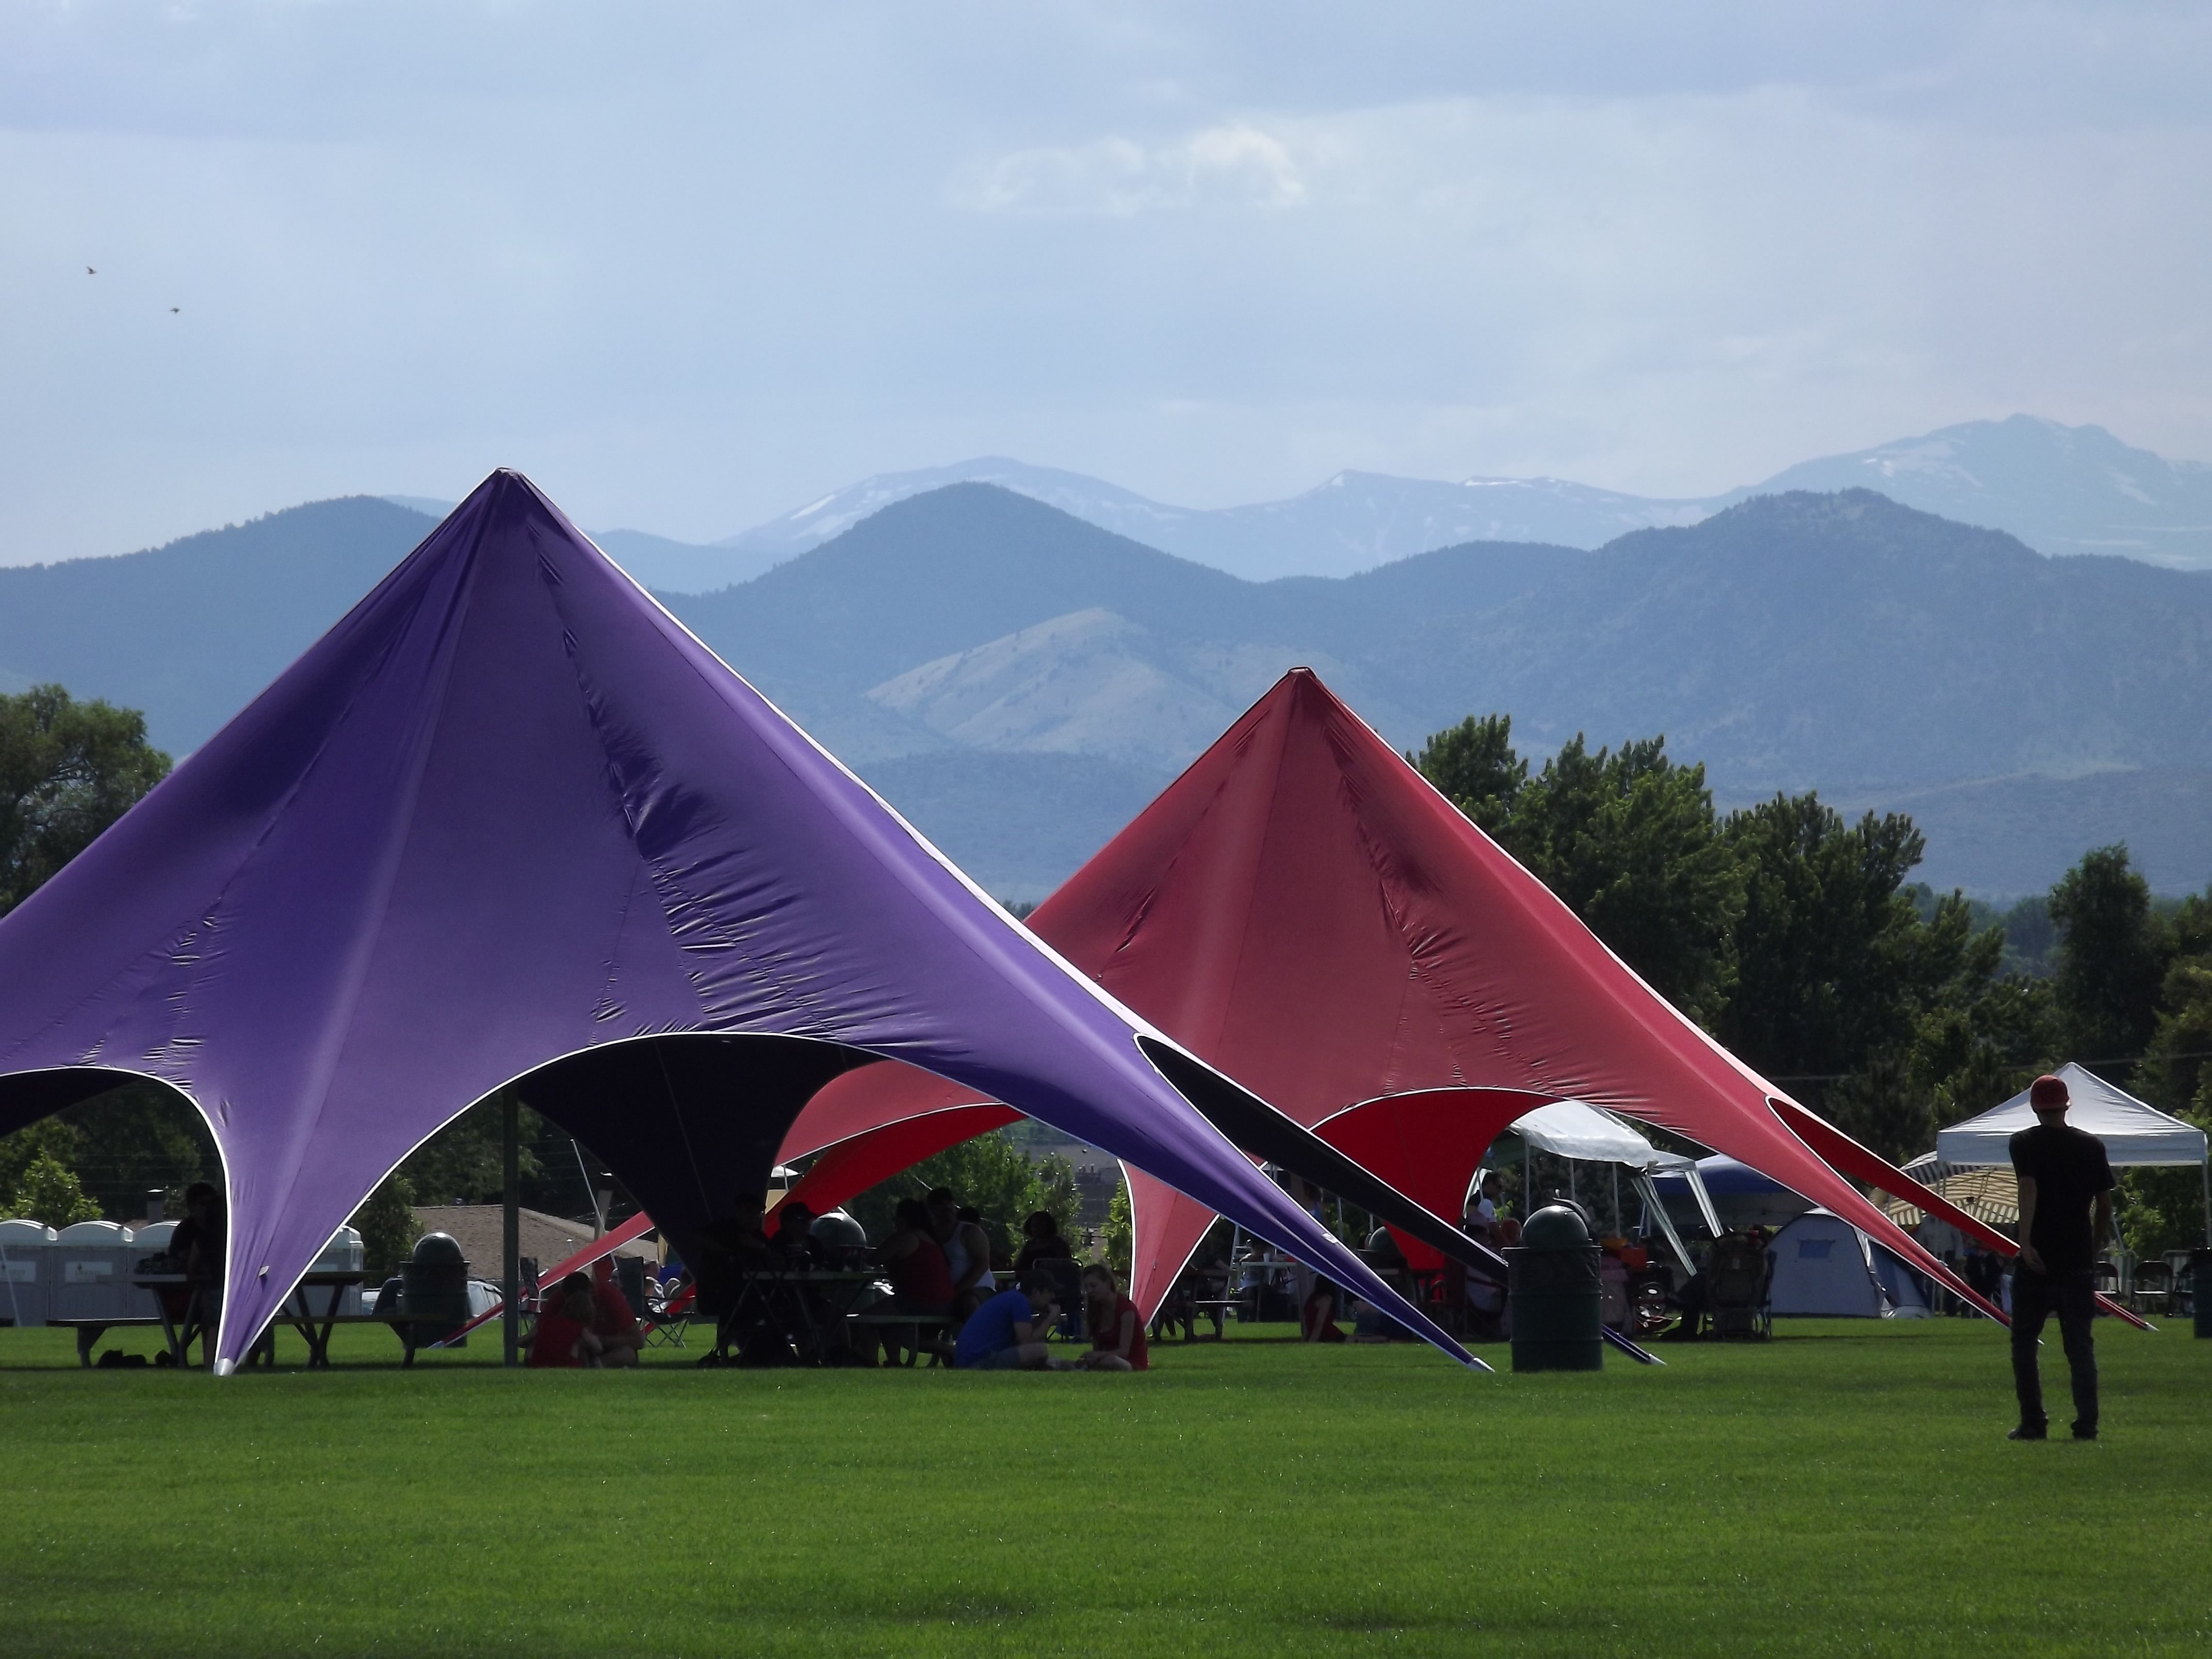 purple and red gazeebo tents